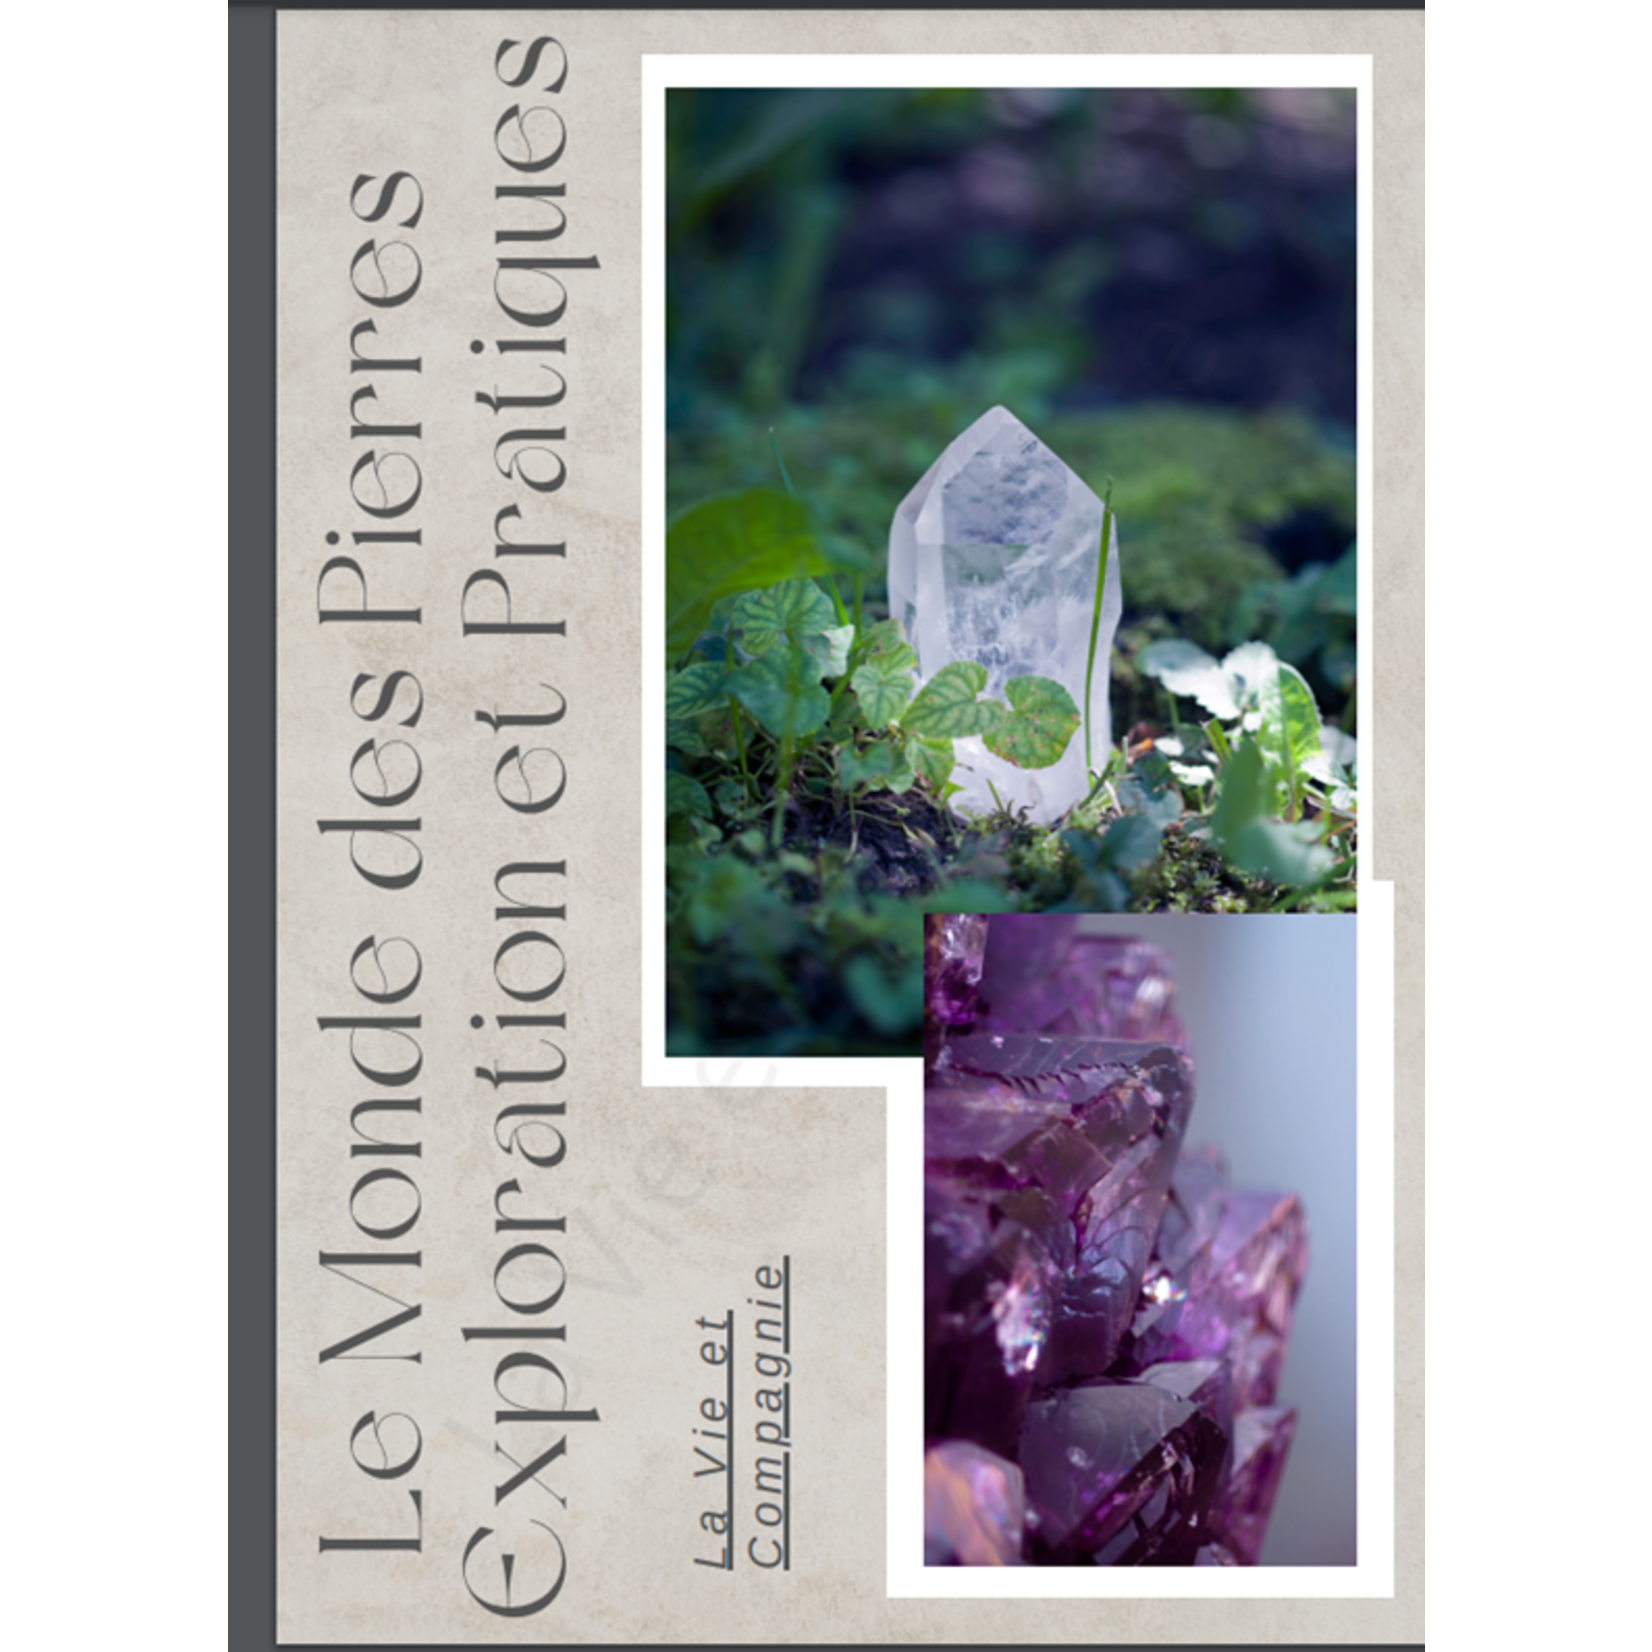 Comprehensive E-book in French on Stones and Crystals/ Le Monde des Pierres: Exploration et Pratiques [PDF, A4]